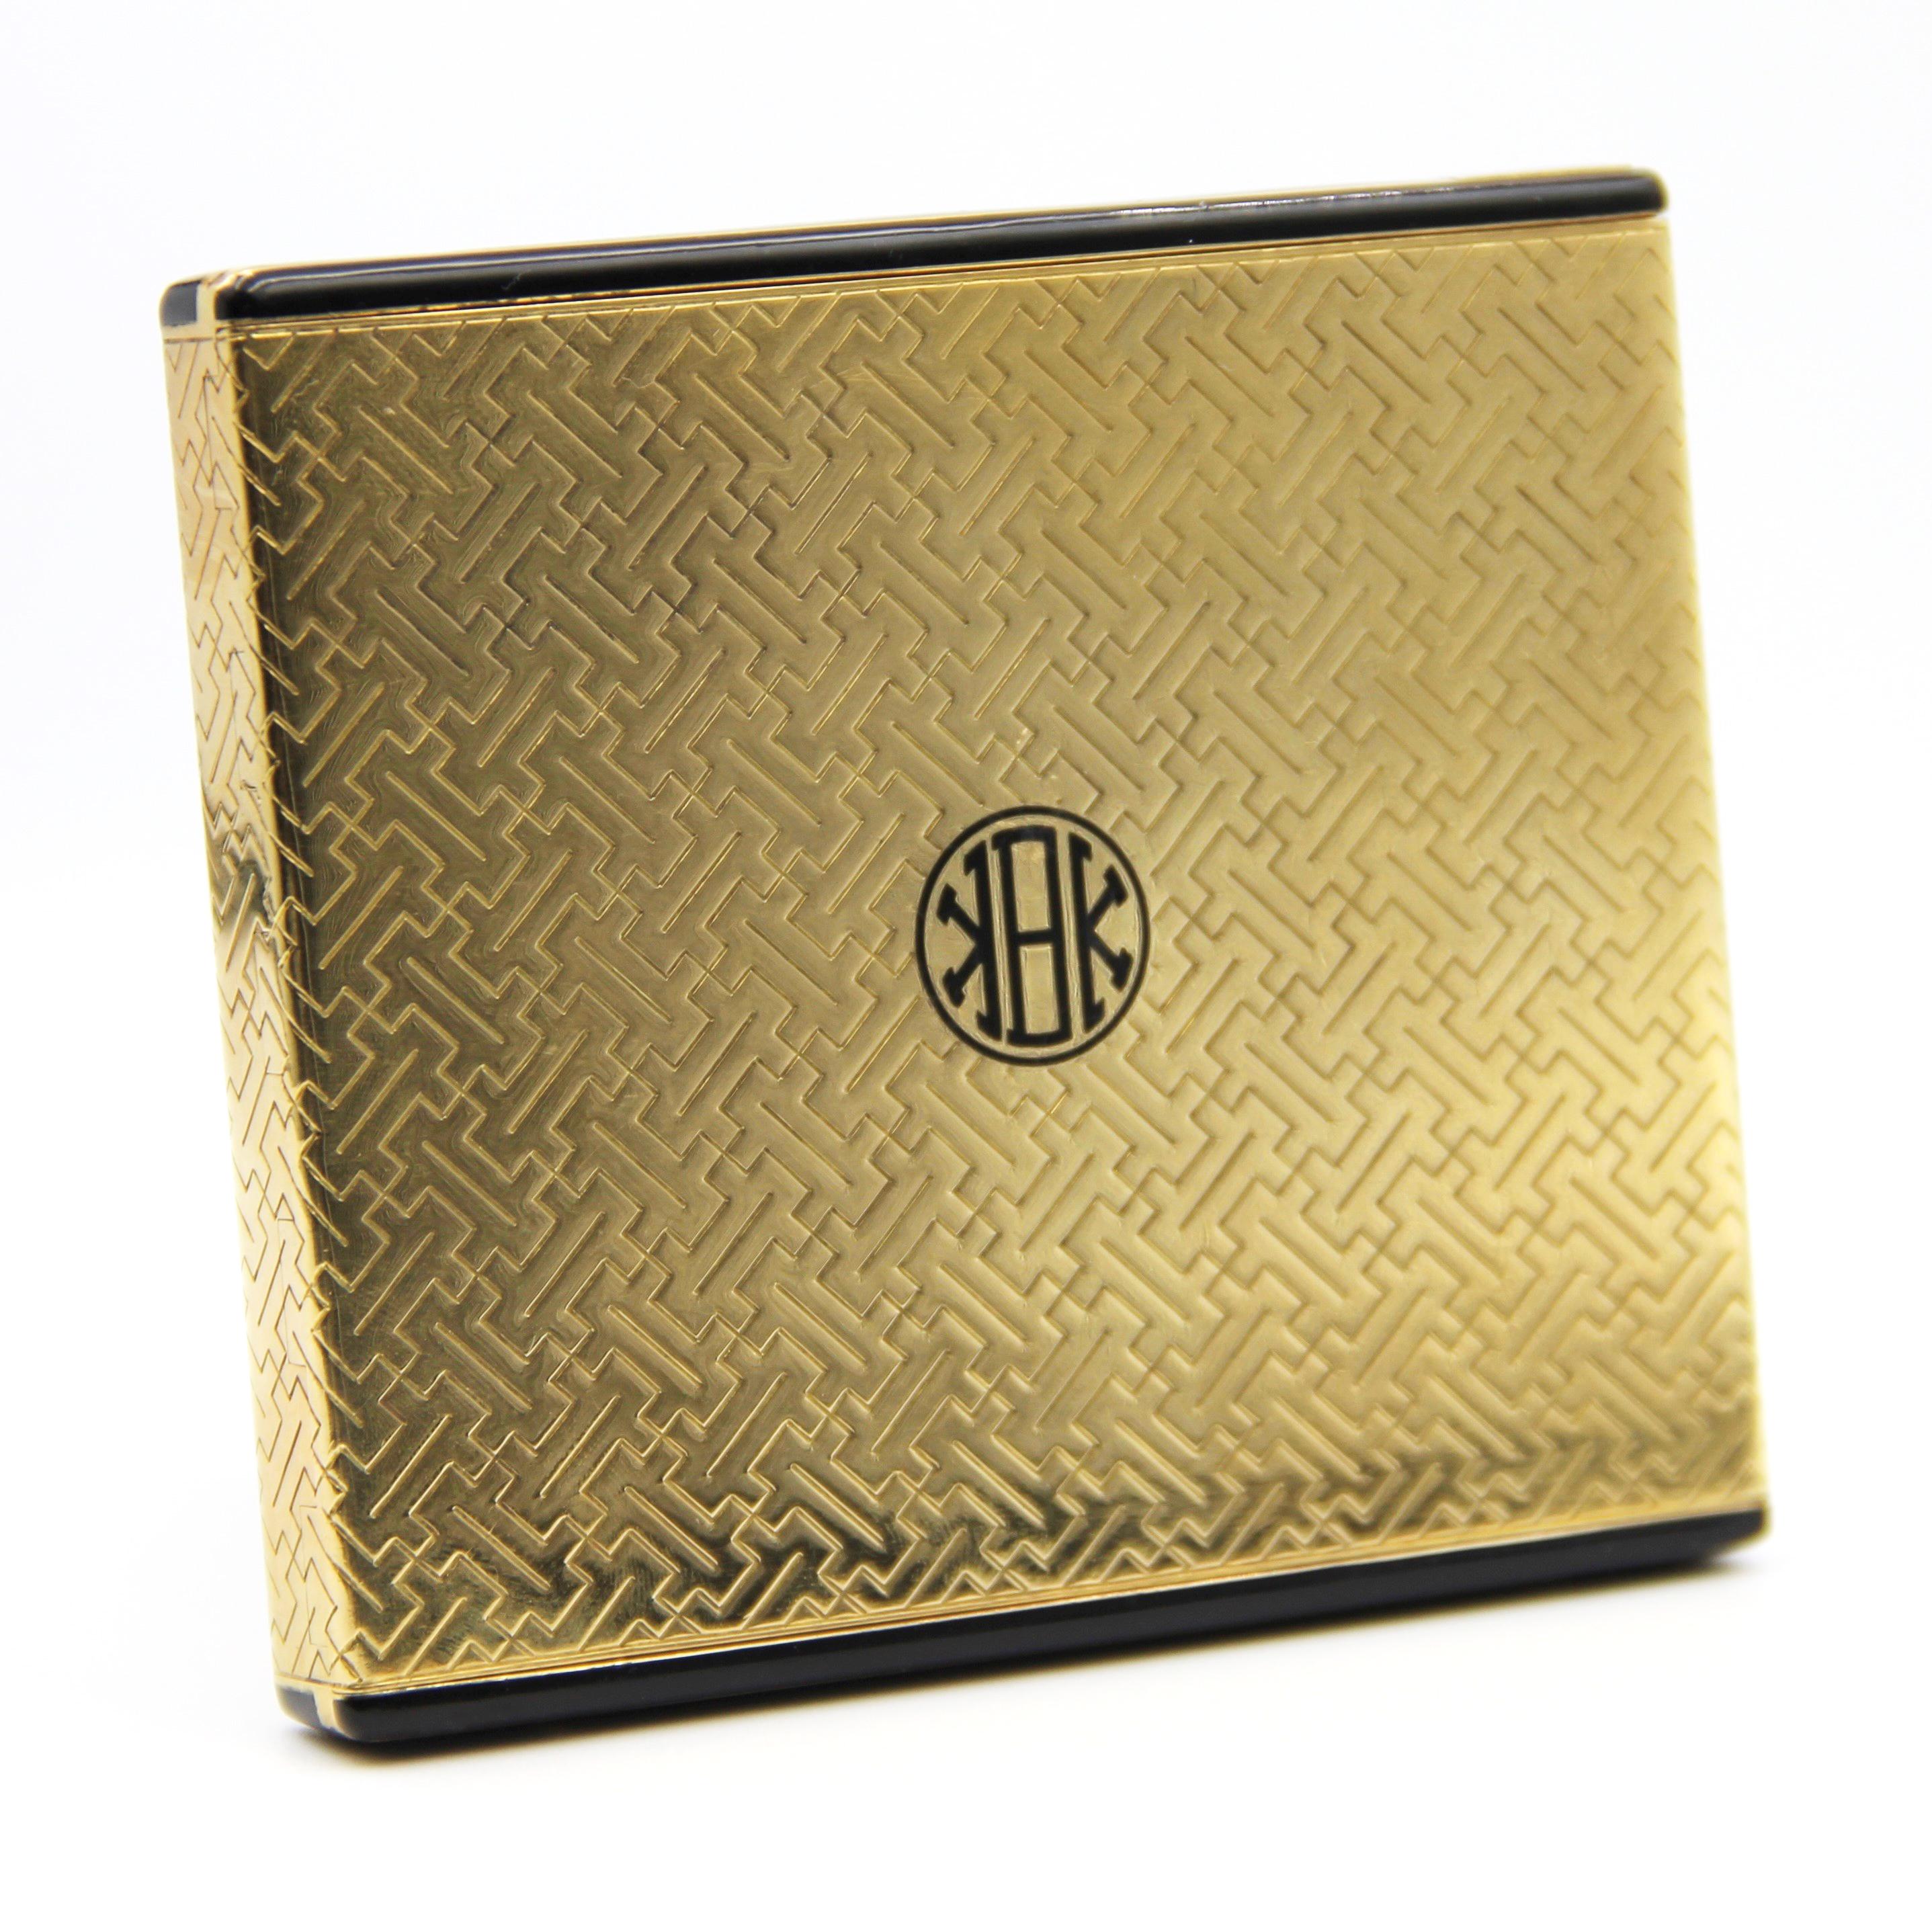 Cartier 18k Gold Enamel Box For Sale 1